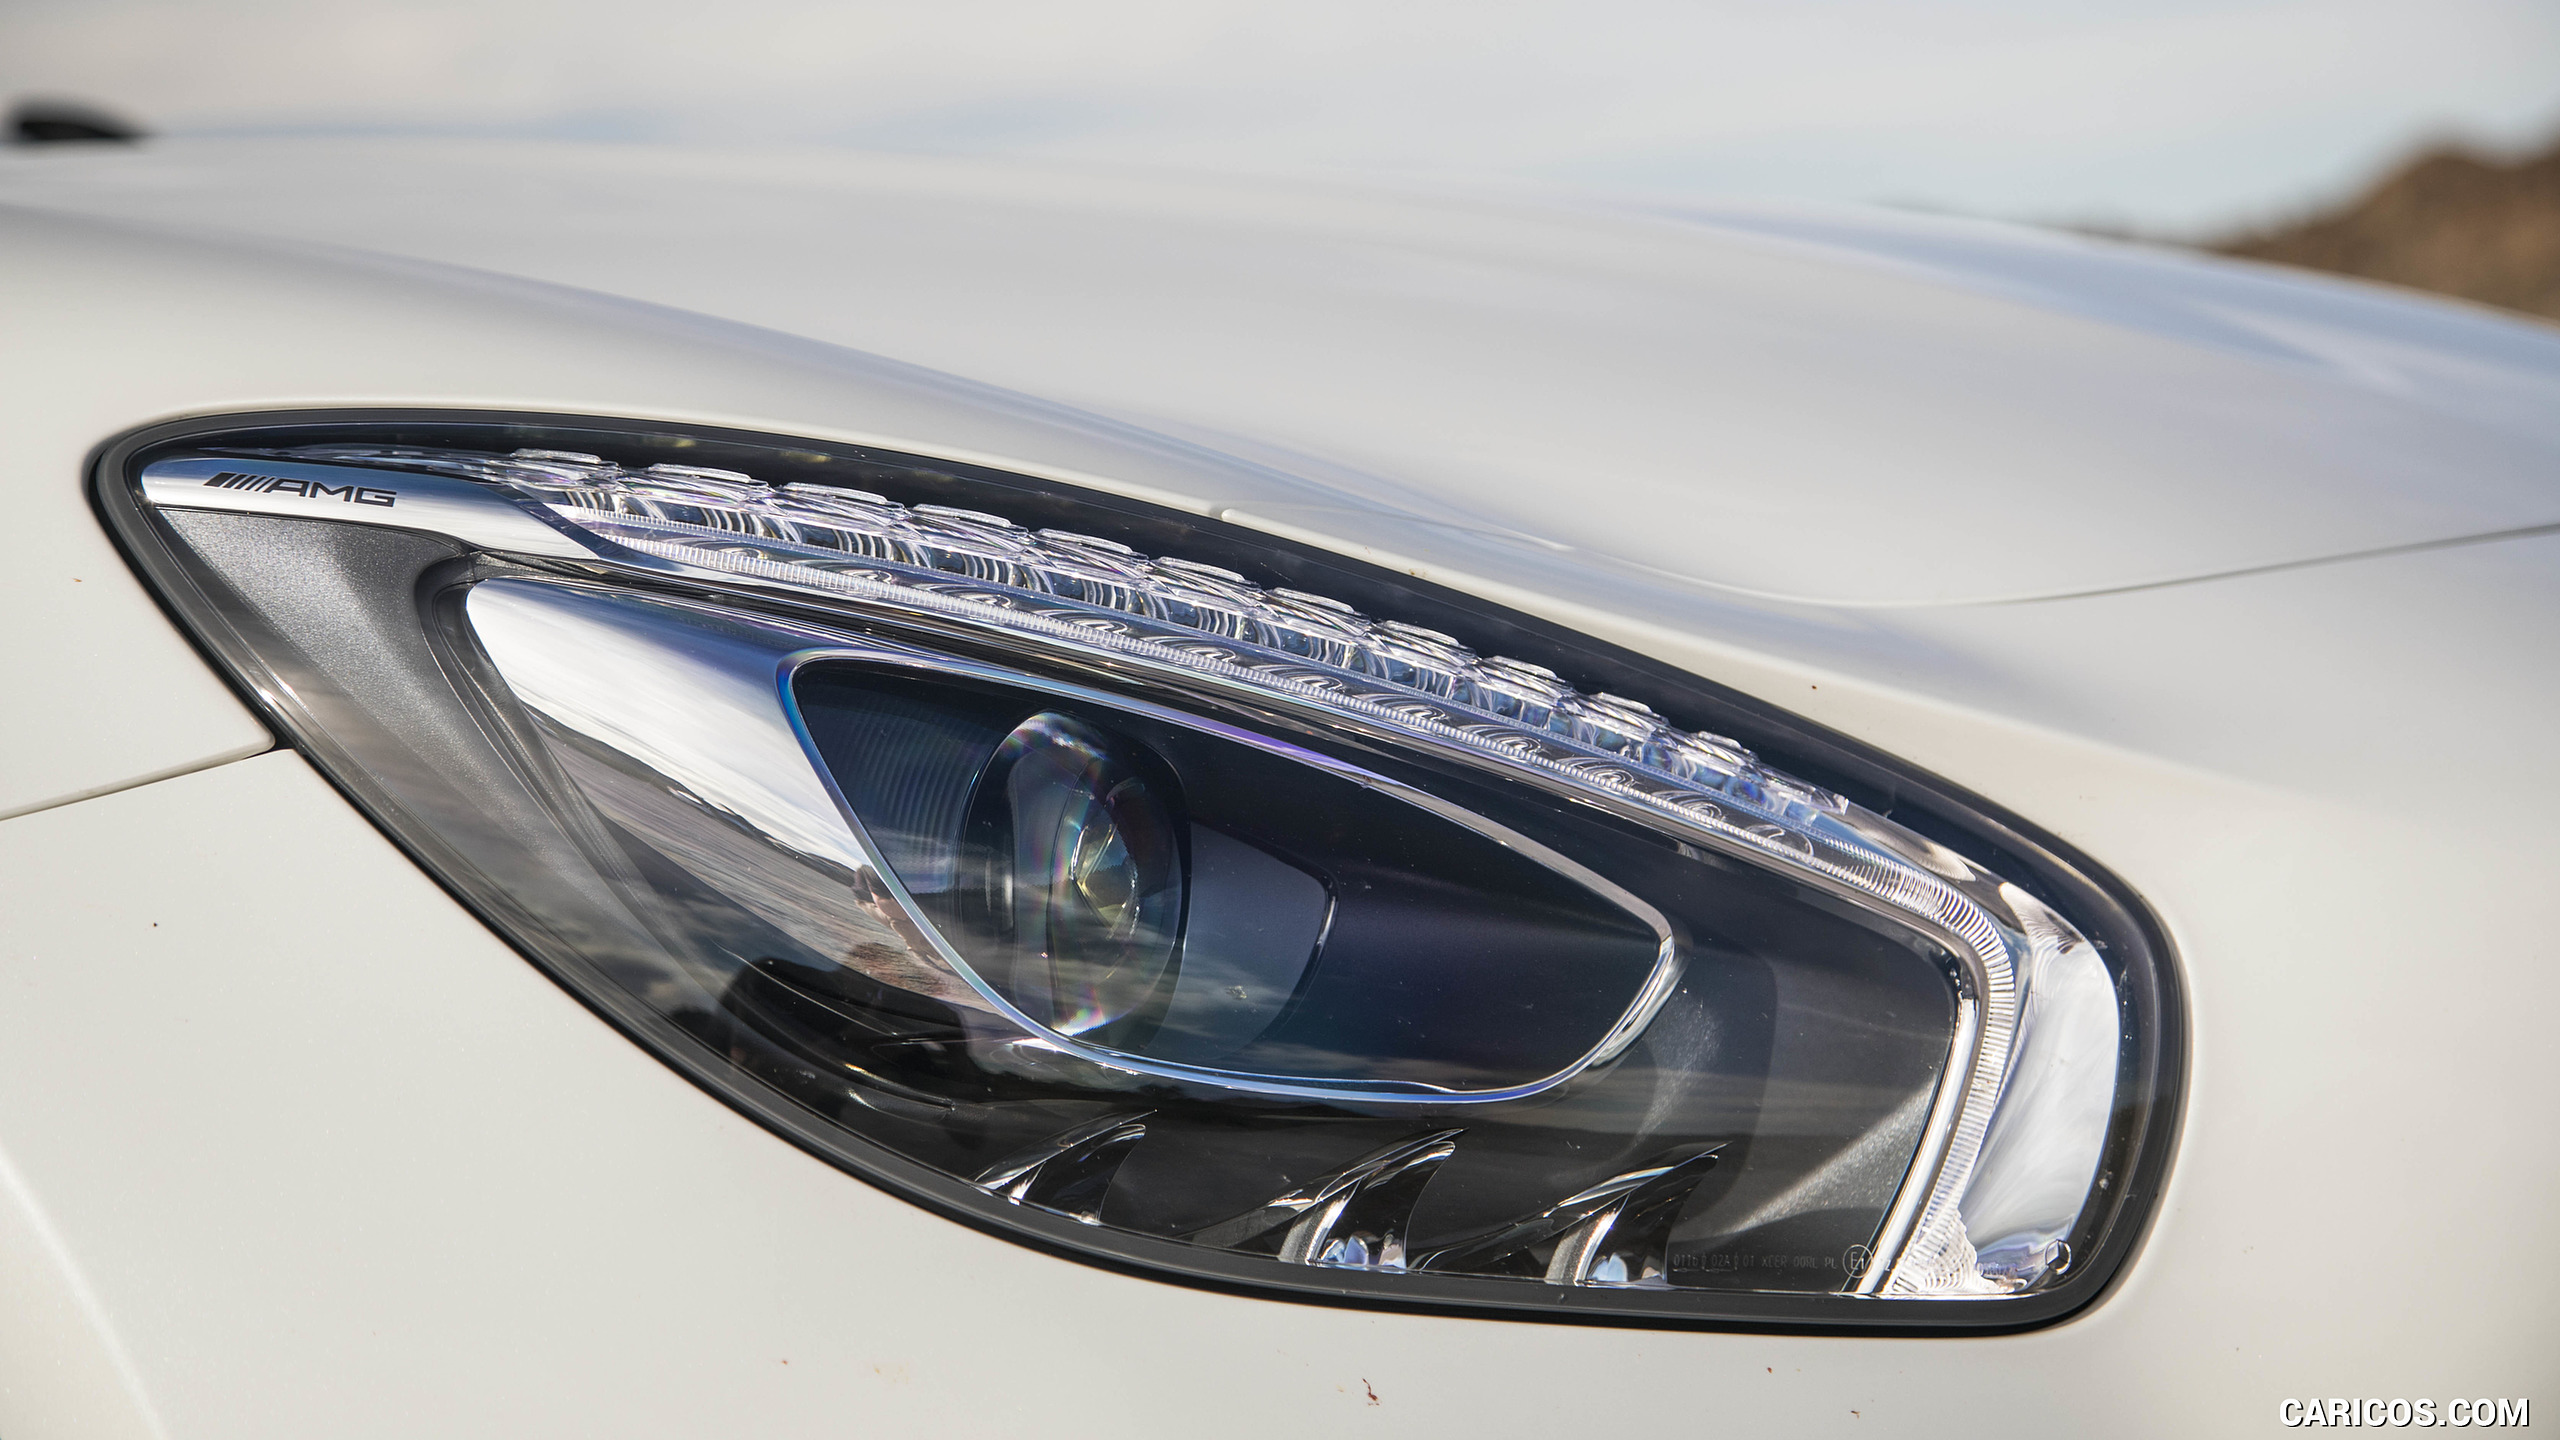 2018 Mercedes-AMG GT Roadster - Headlight, #101 of 350